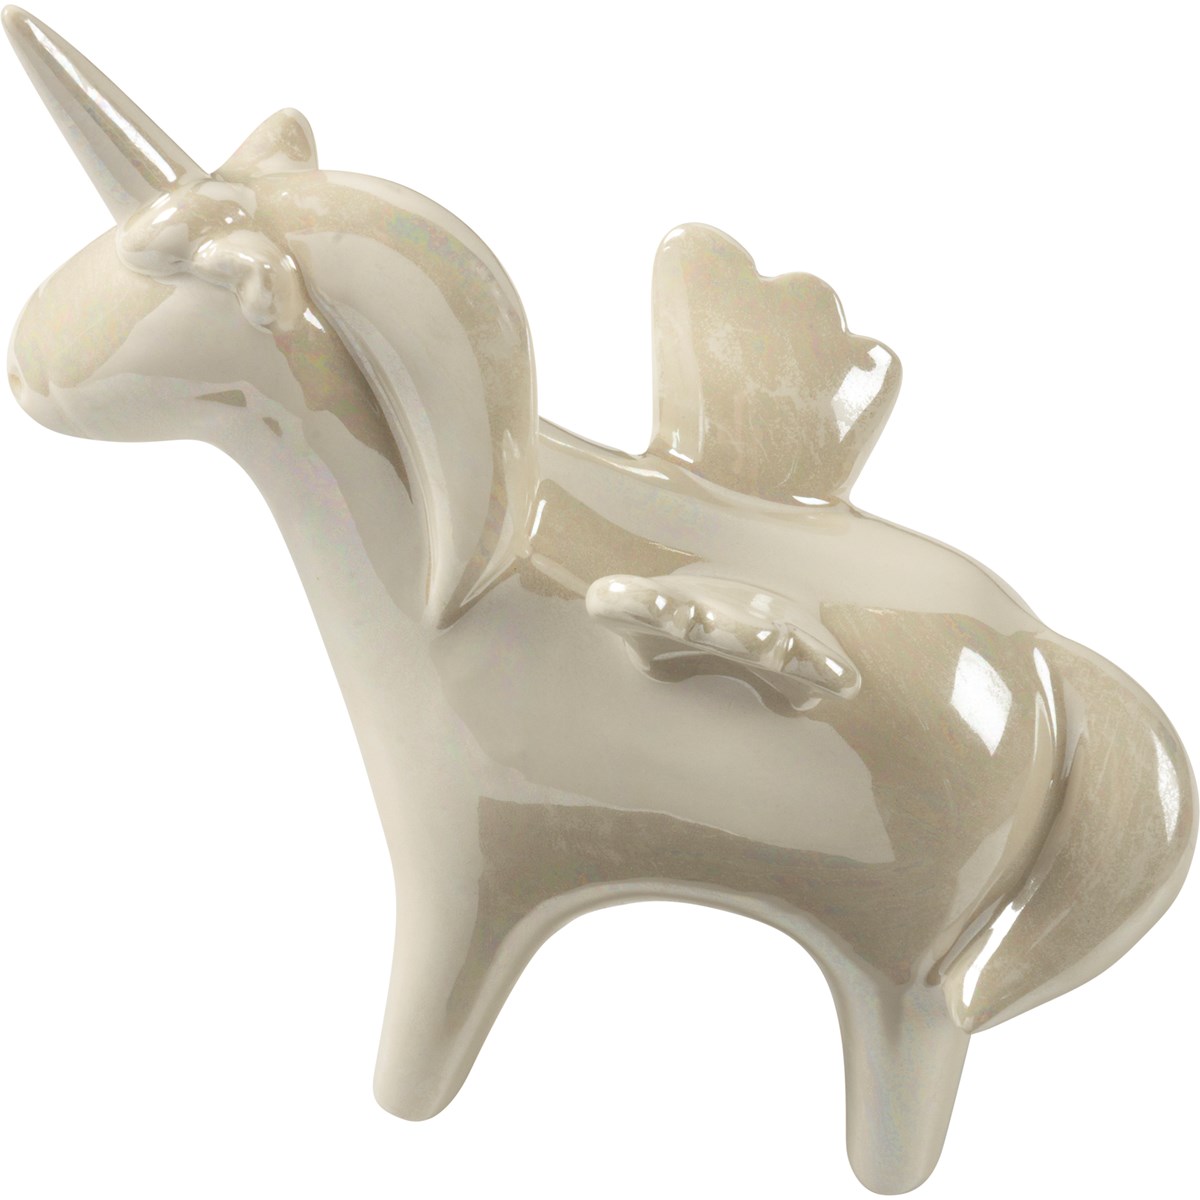 Figurine - Lg Unicorn - 6" x 5.75" x 2.25" - Ceramic